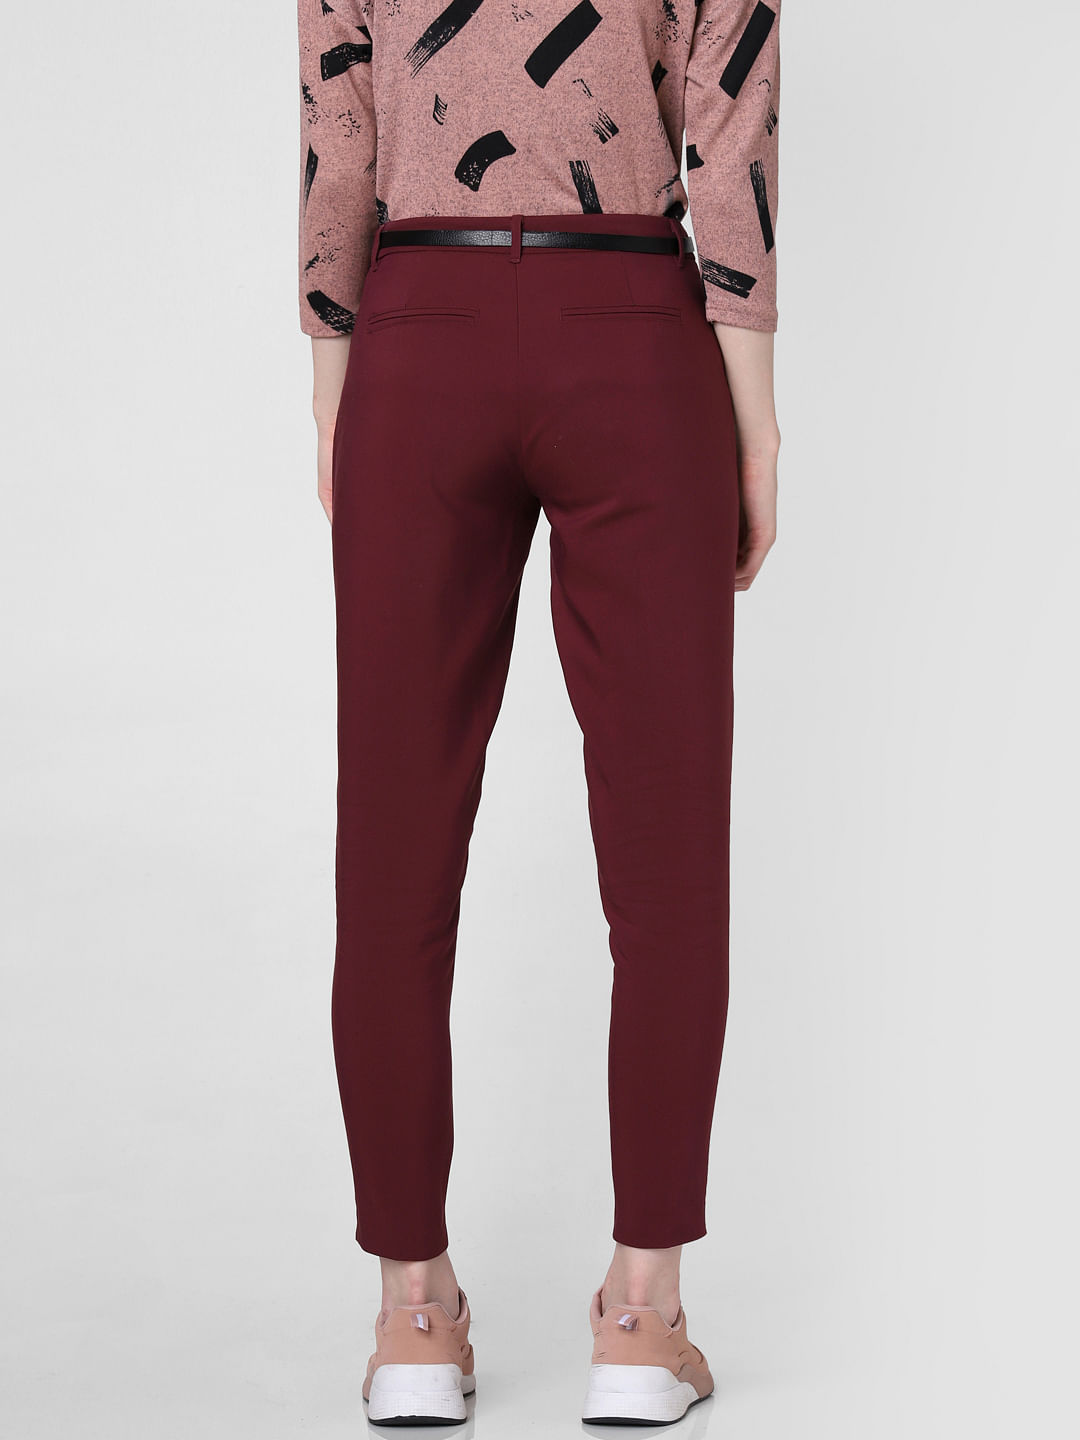 Trousers Zara Burgundy size S International in Cotton  14508999